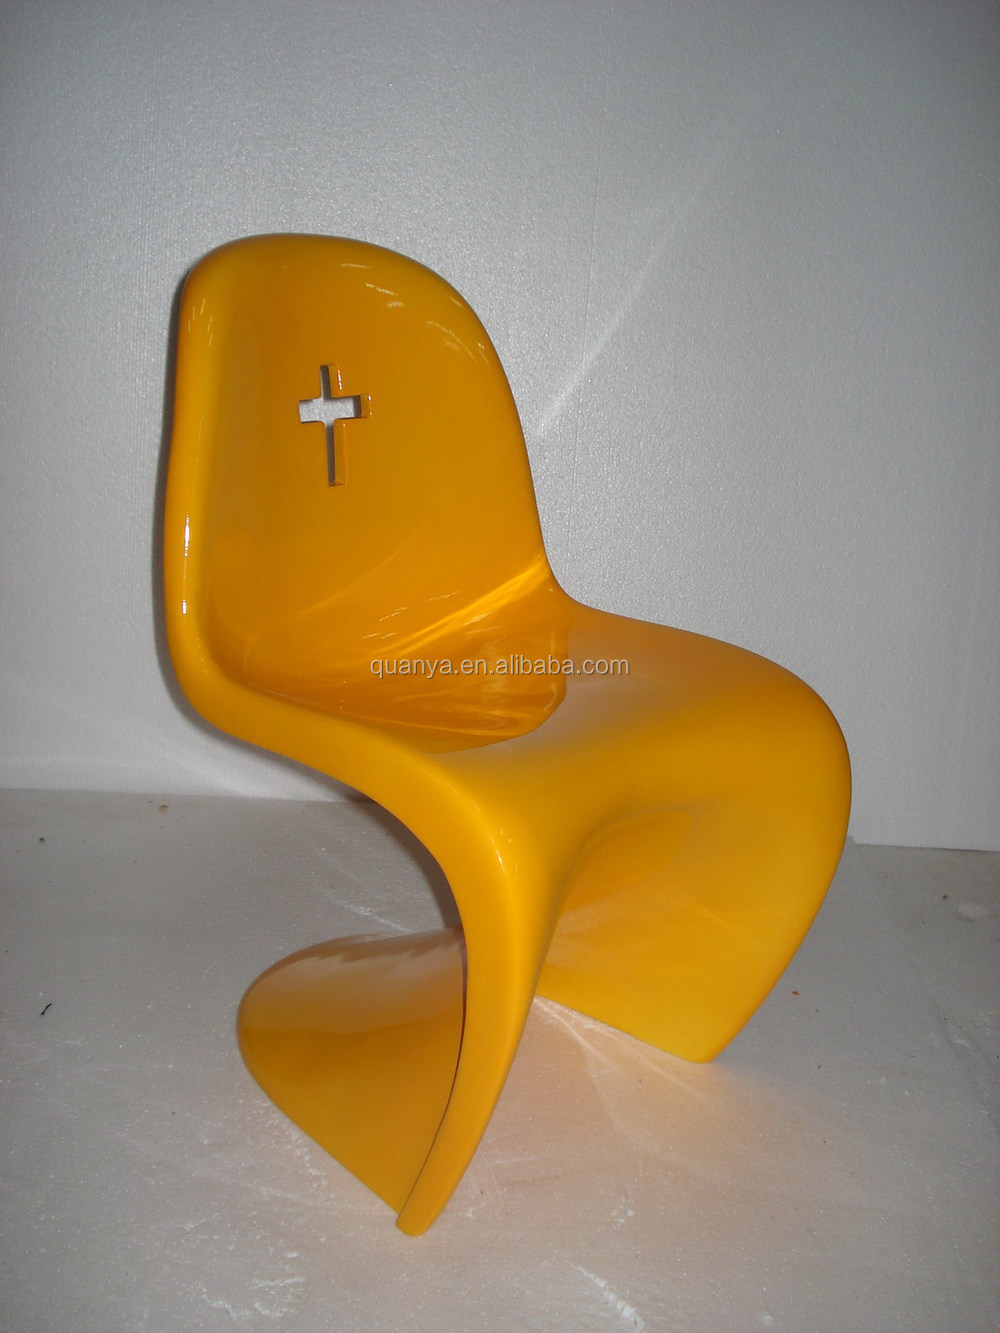 chidren素敵なs字型の椅子、 子供のためのグラスファイバーレジャーの学校の椅子仕入れ・メーカー・工場